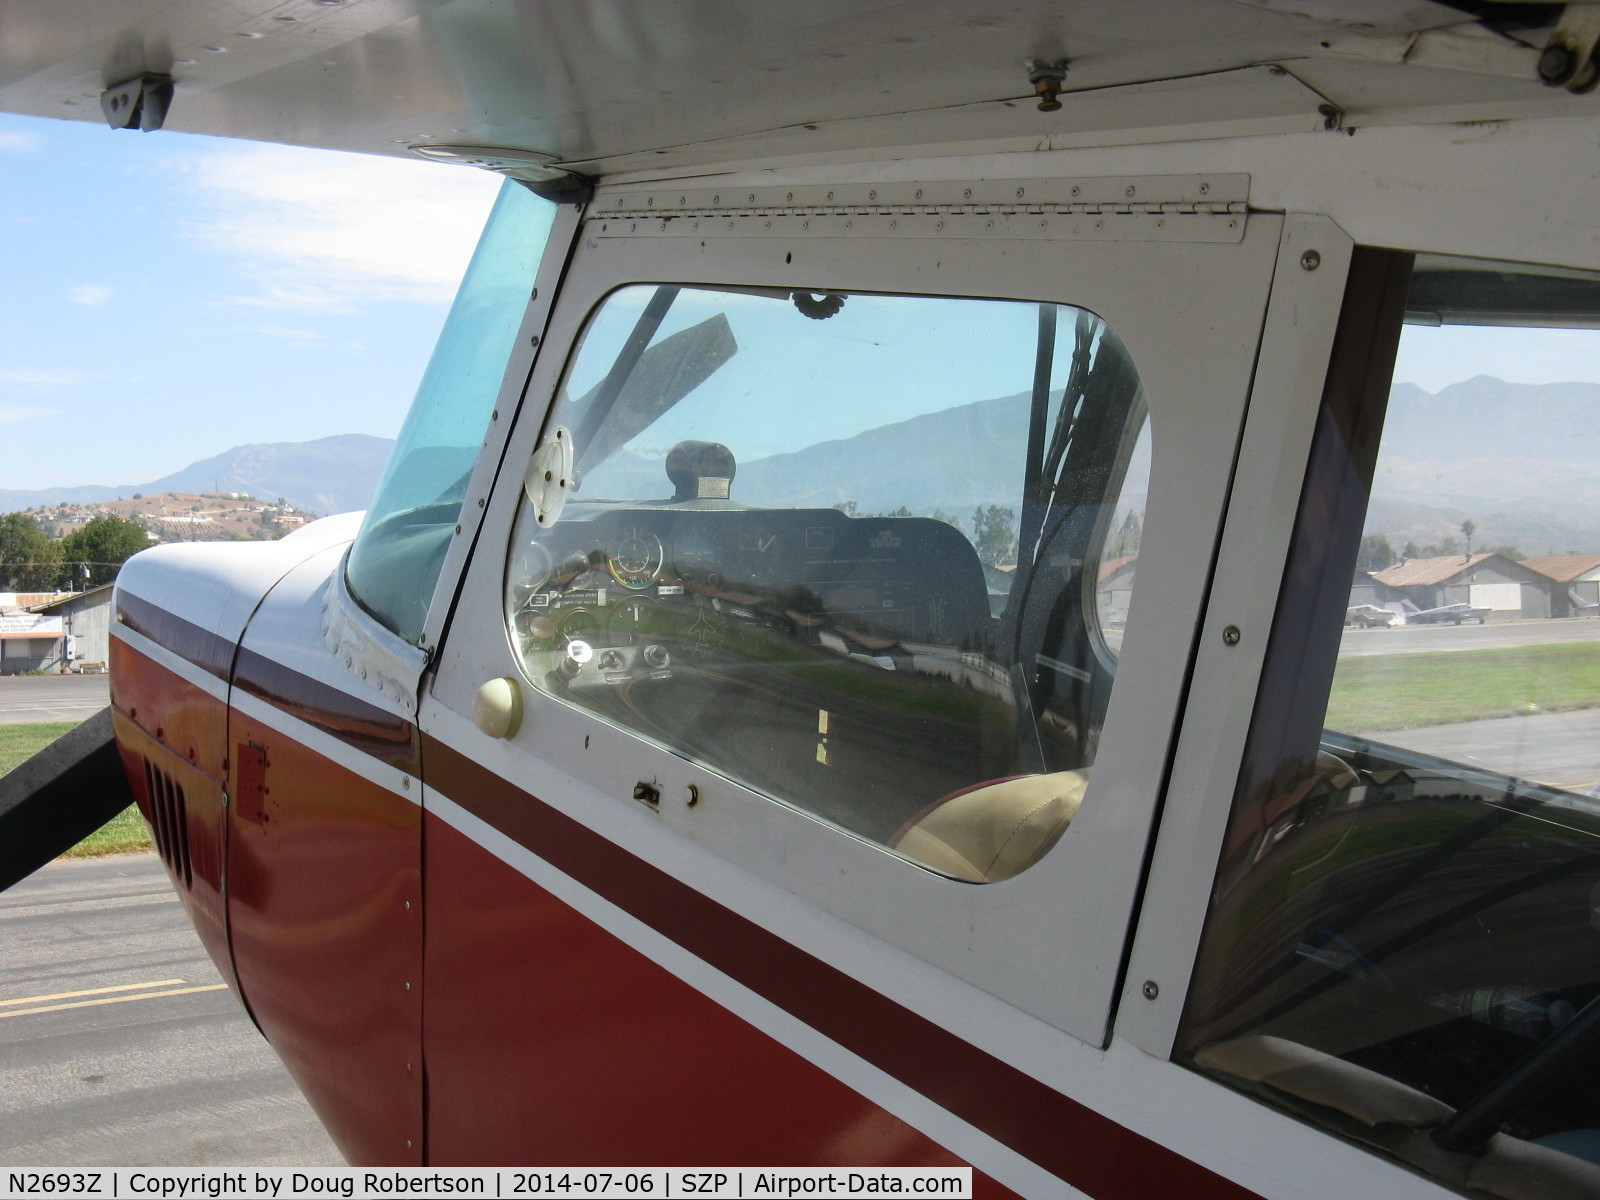 N2693Z, 1978 Bellanca 8GCBC C/N 268-78, 1978 Bellanca 8GCBC SCOUT, Lycoming O&VO-360 180 Hp, open-able cockpit window in flight